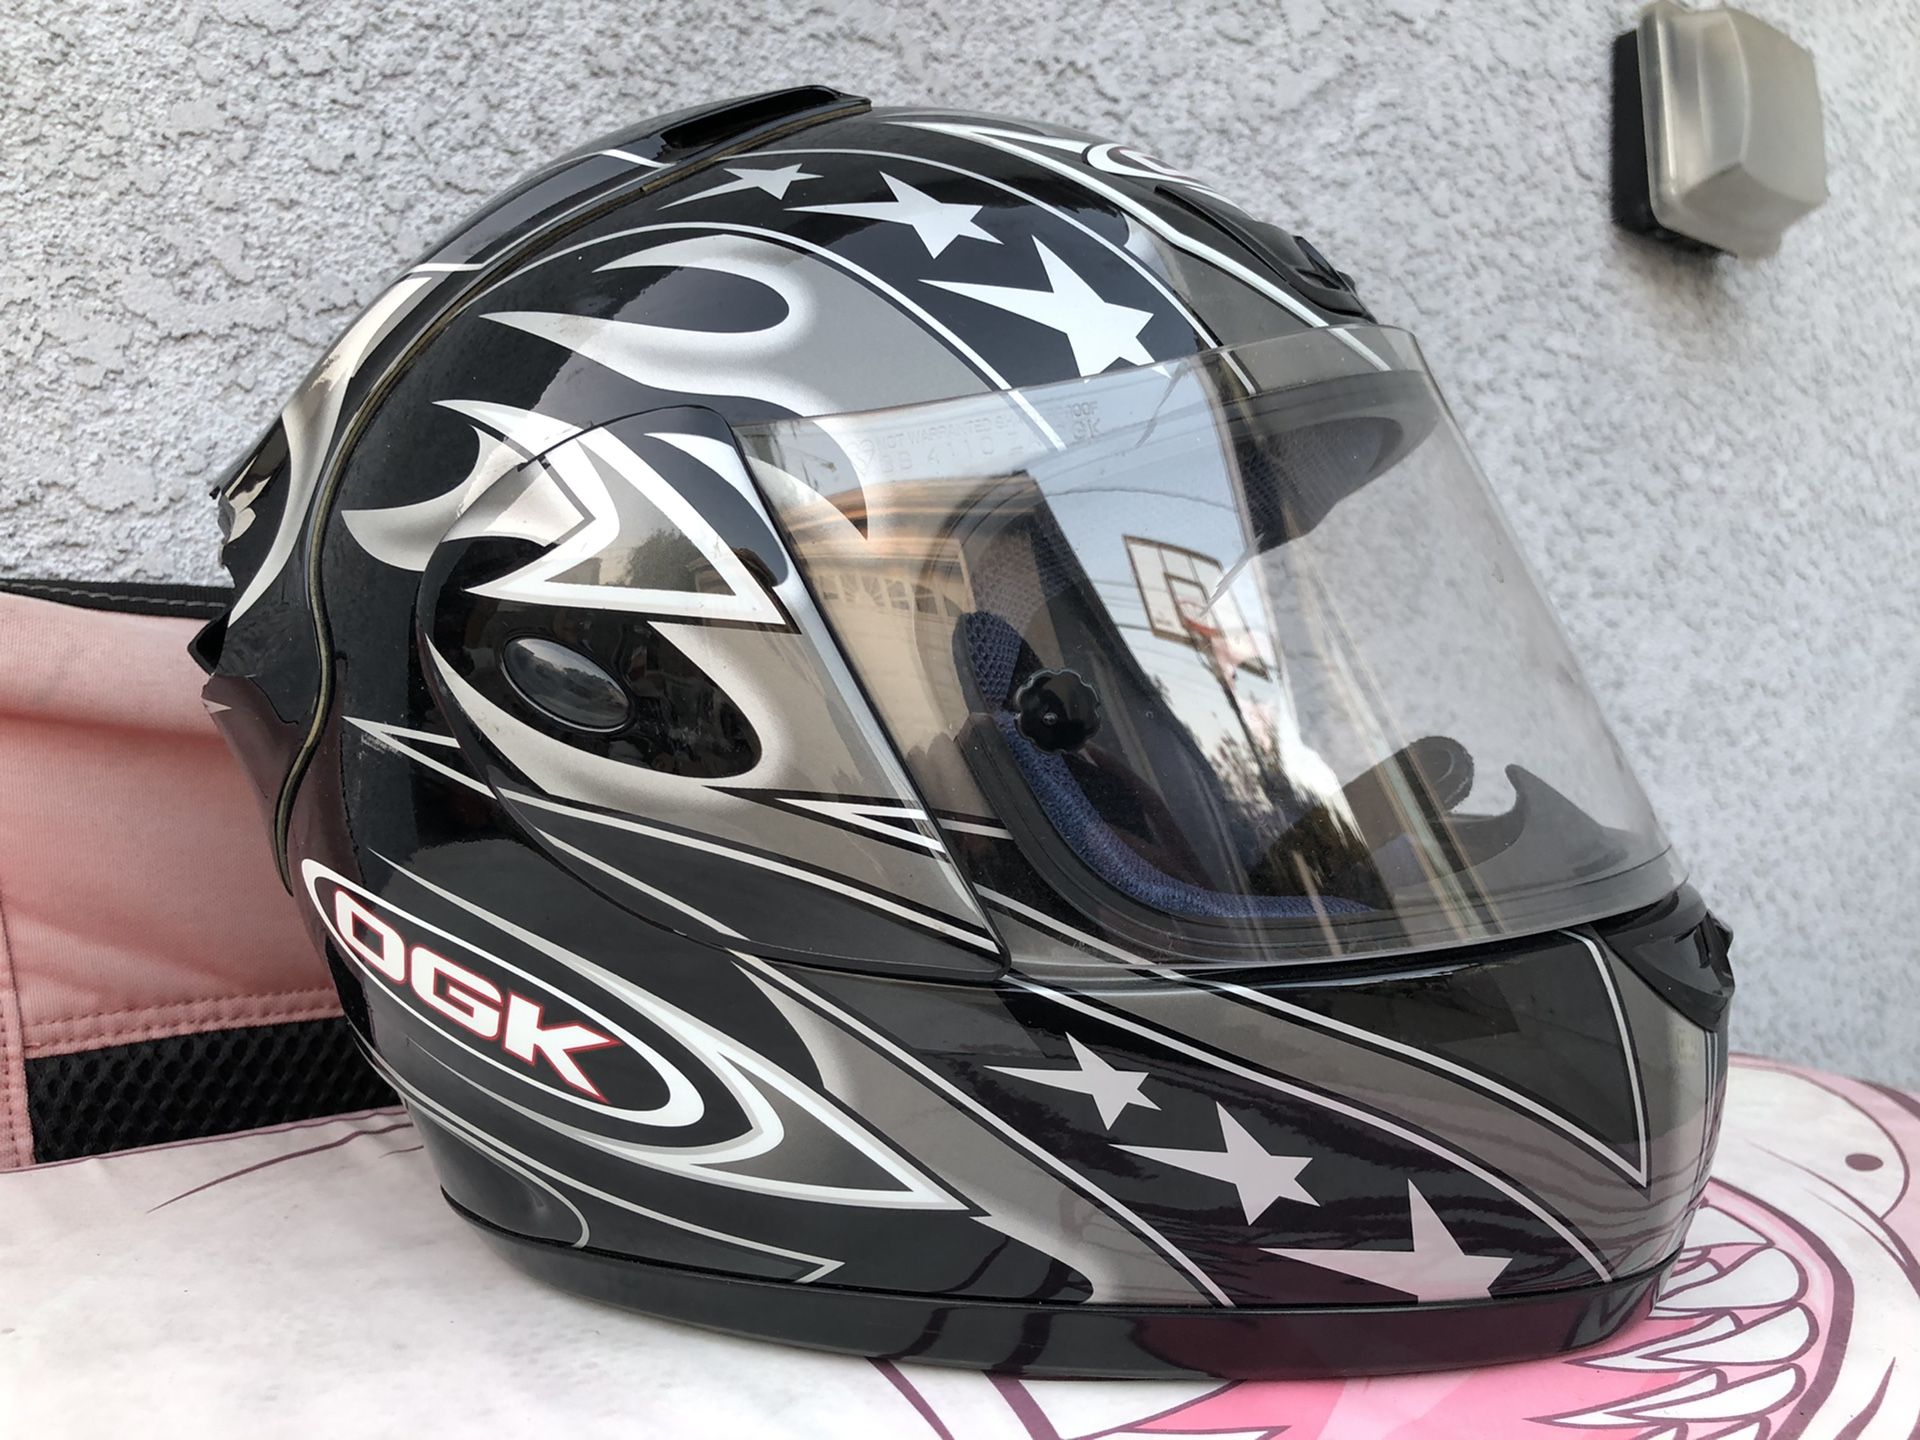 OGK ff3-gp motorcycle helmet black silver flames, Medium/Small, like new with box, bag